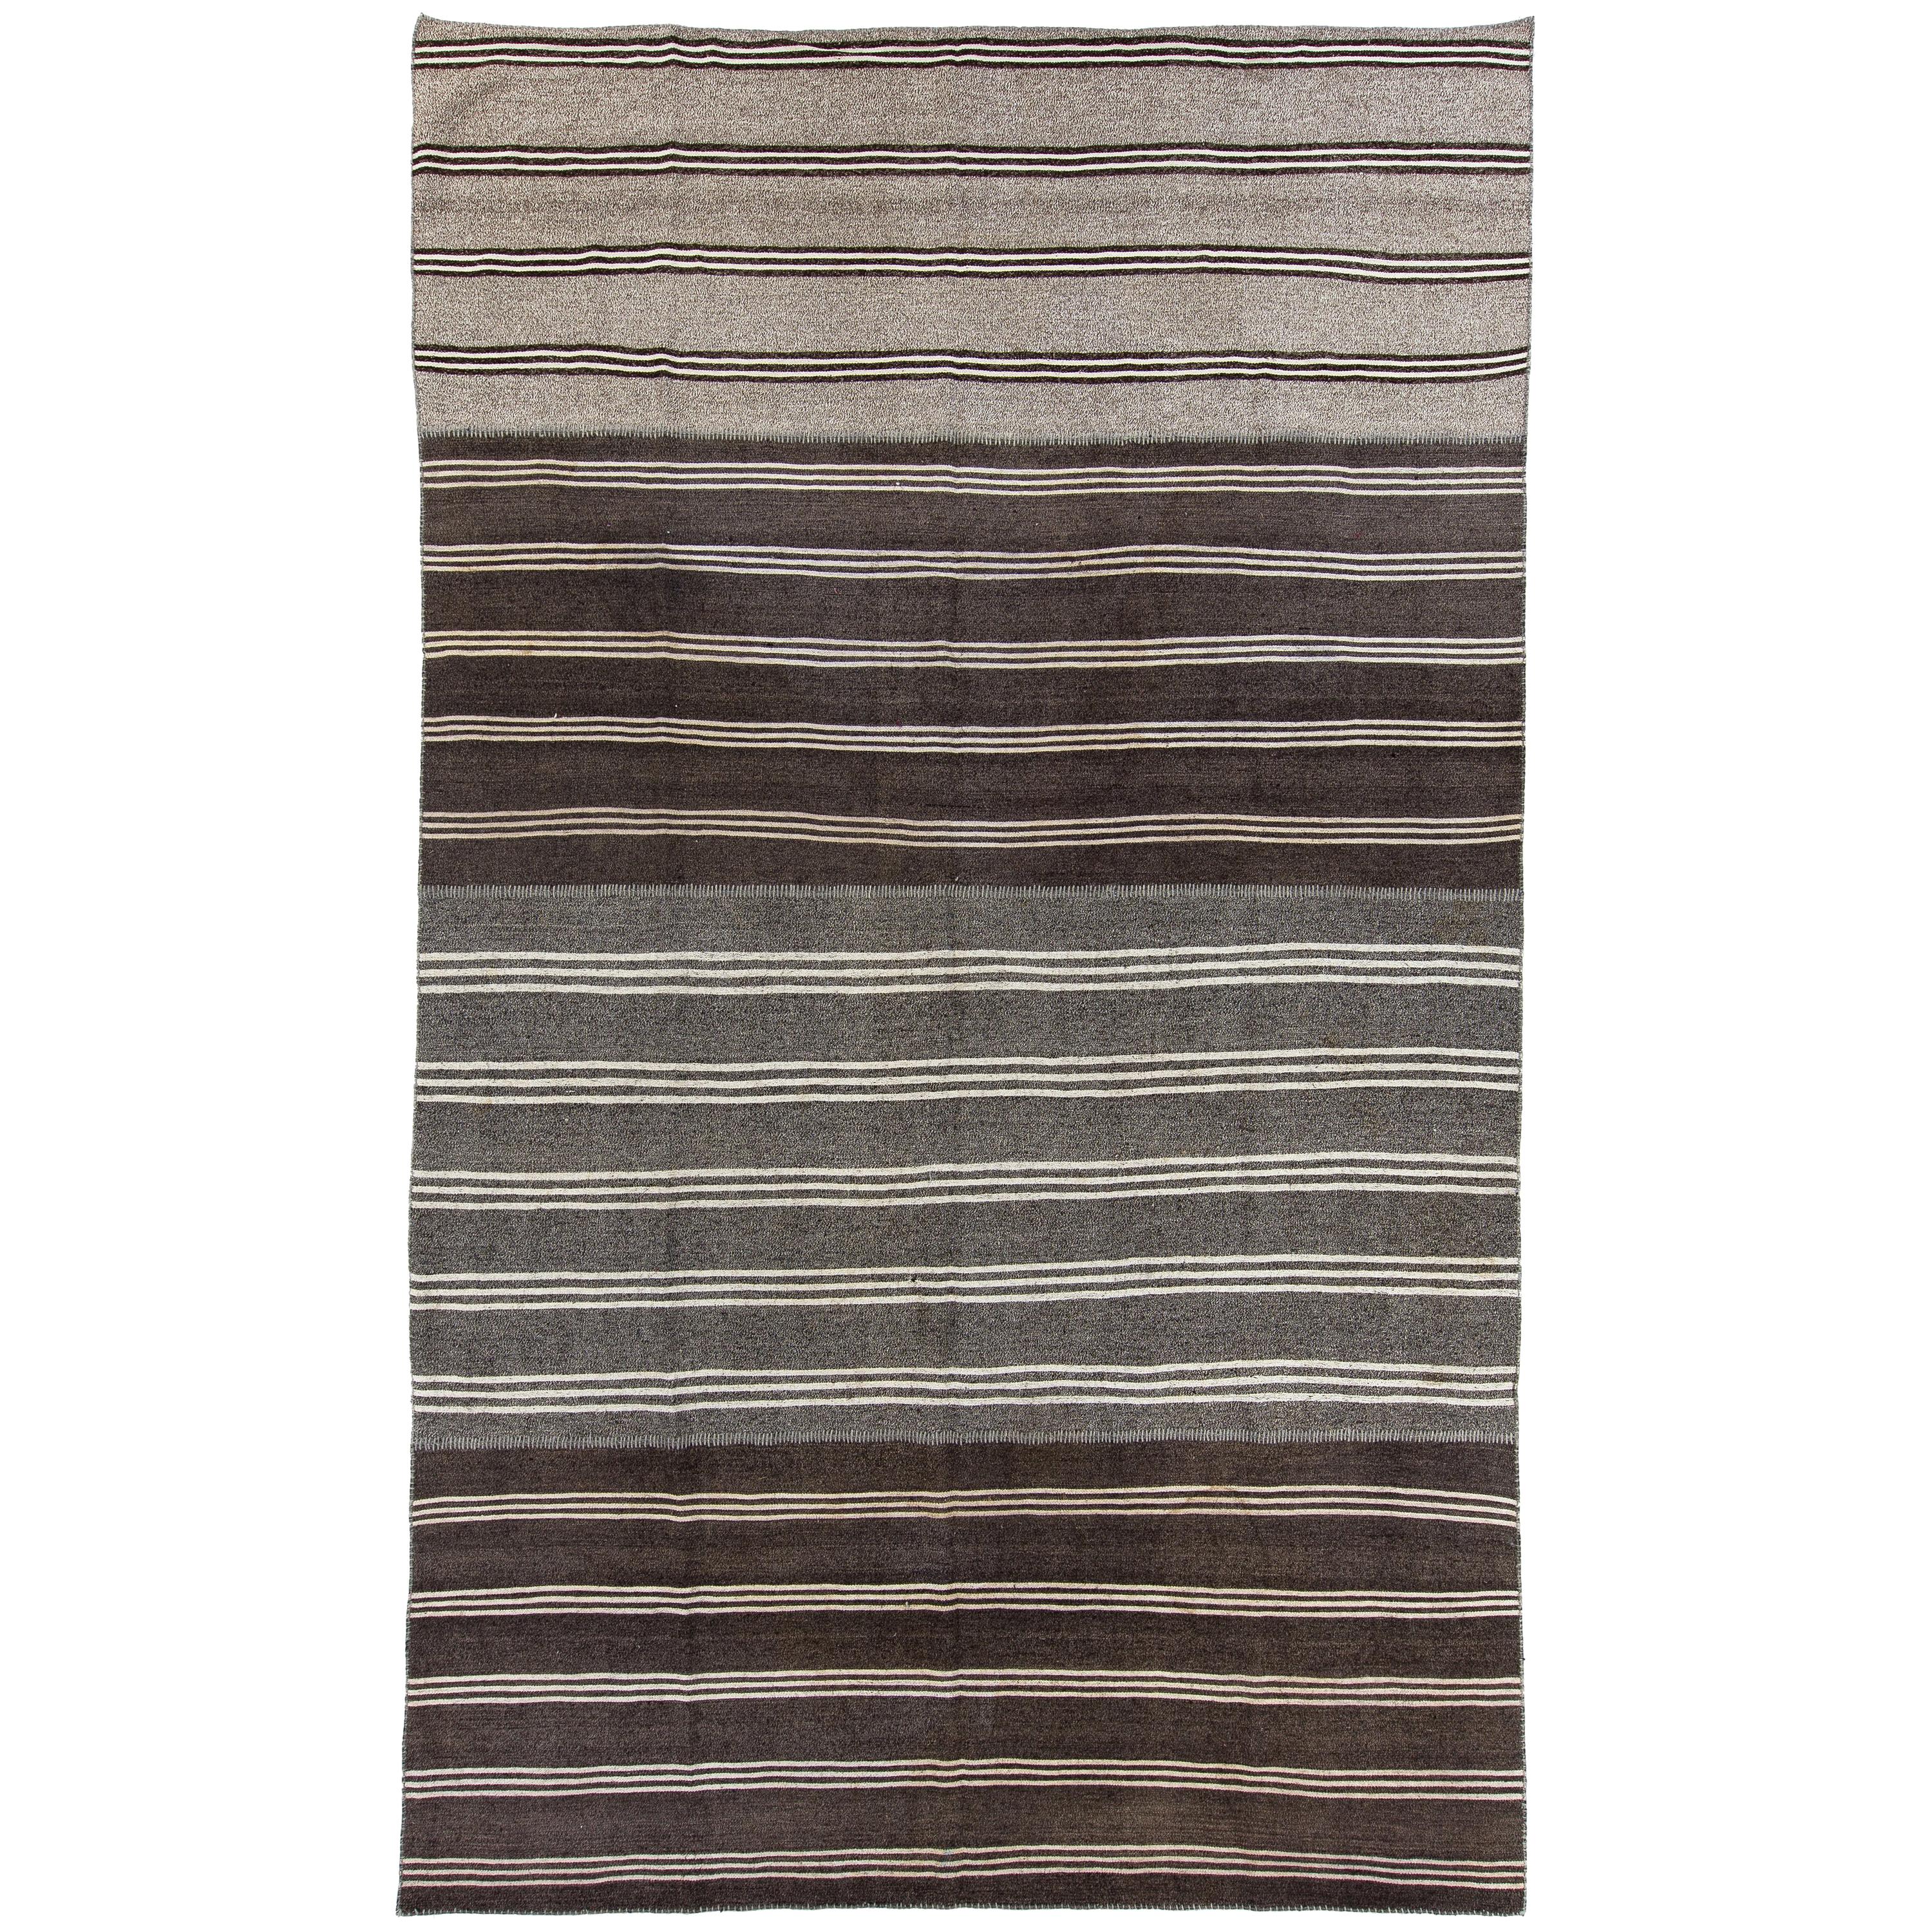 9.2x15 Ft Large Striped Hand-Woven Kilim, Vintage Turkish Flat Weave Rug